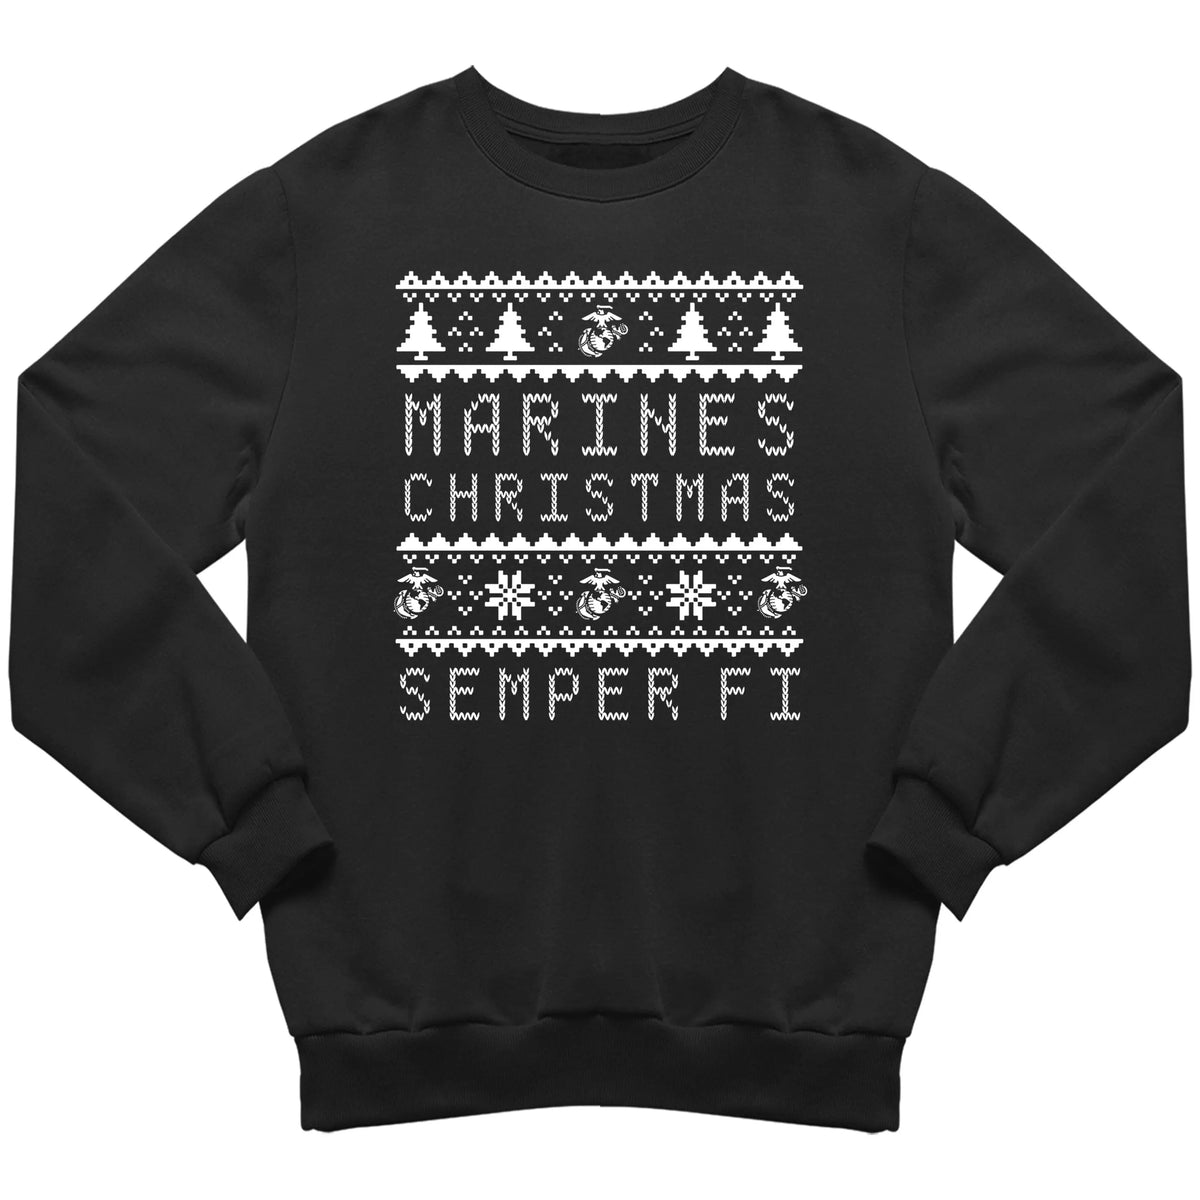 Closeout Marines Christmas Sweatshirt Black